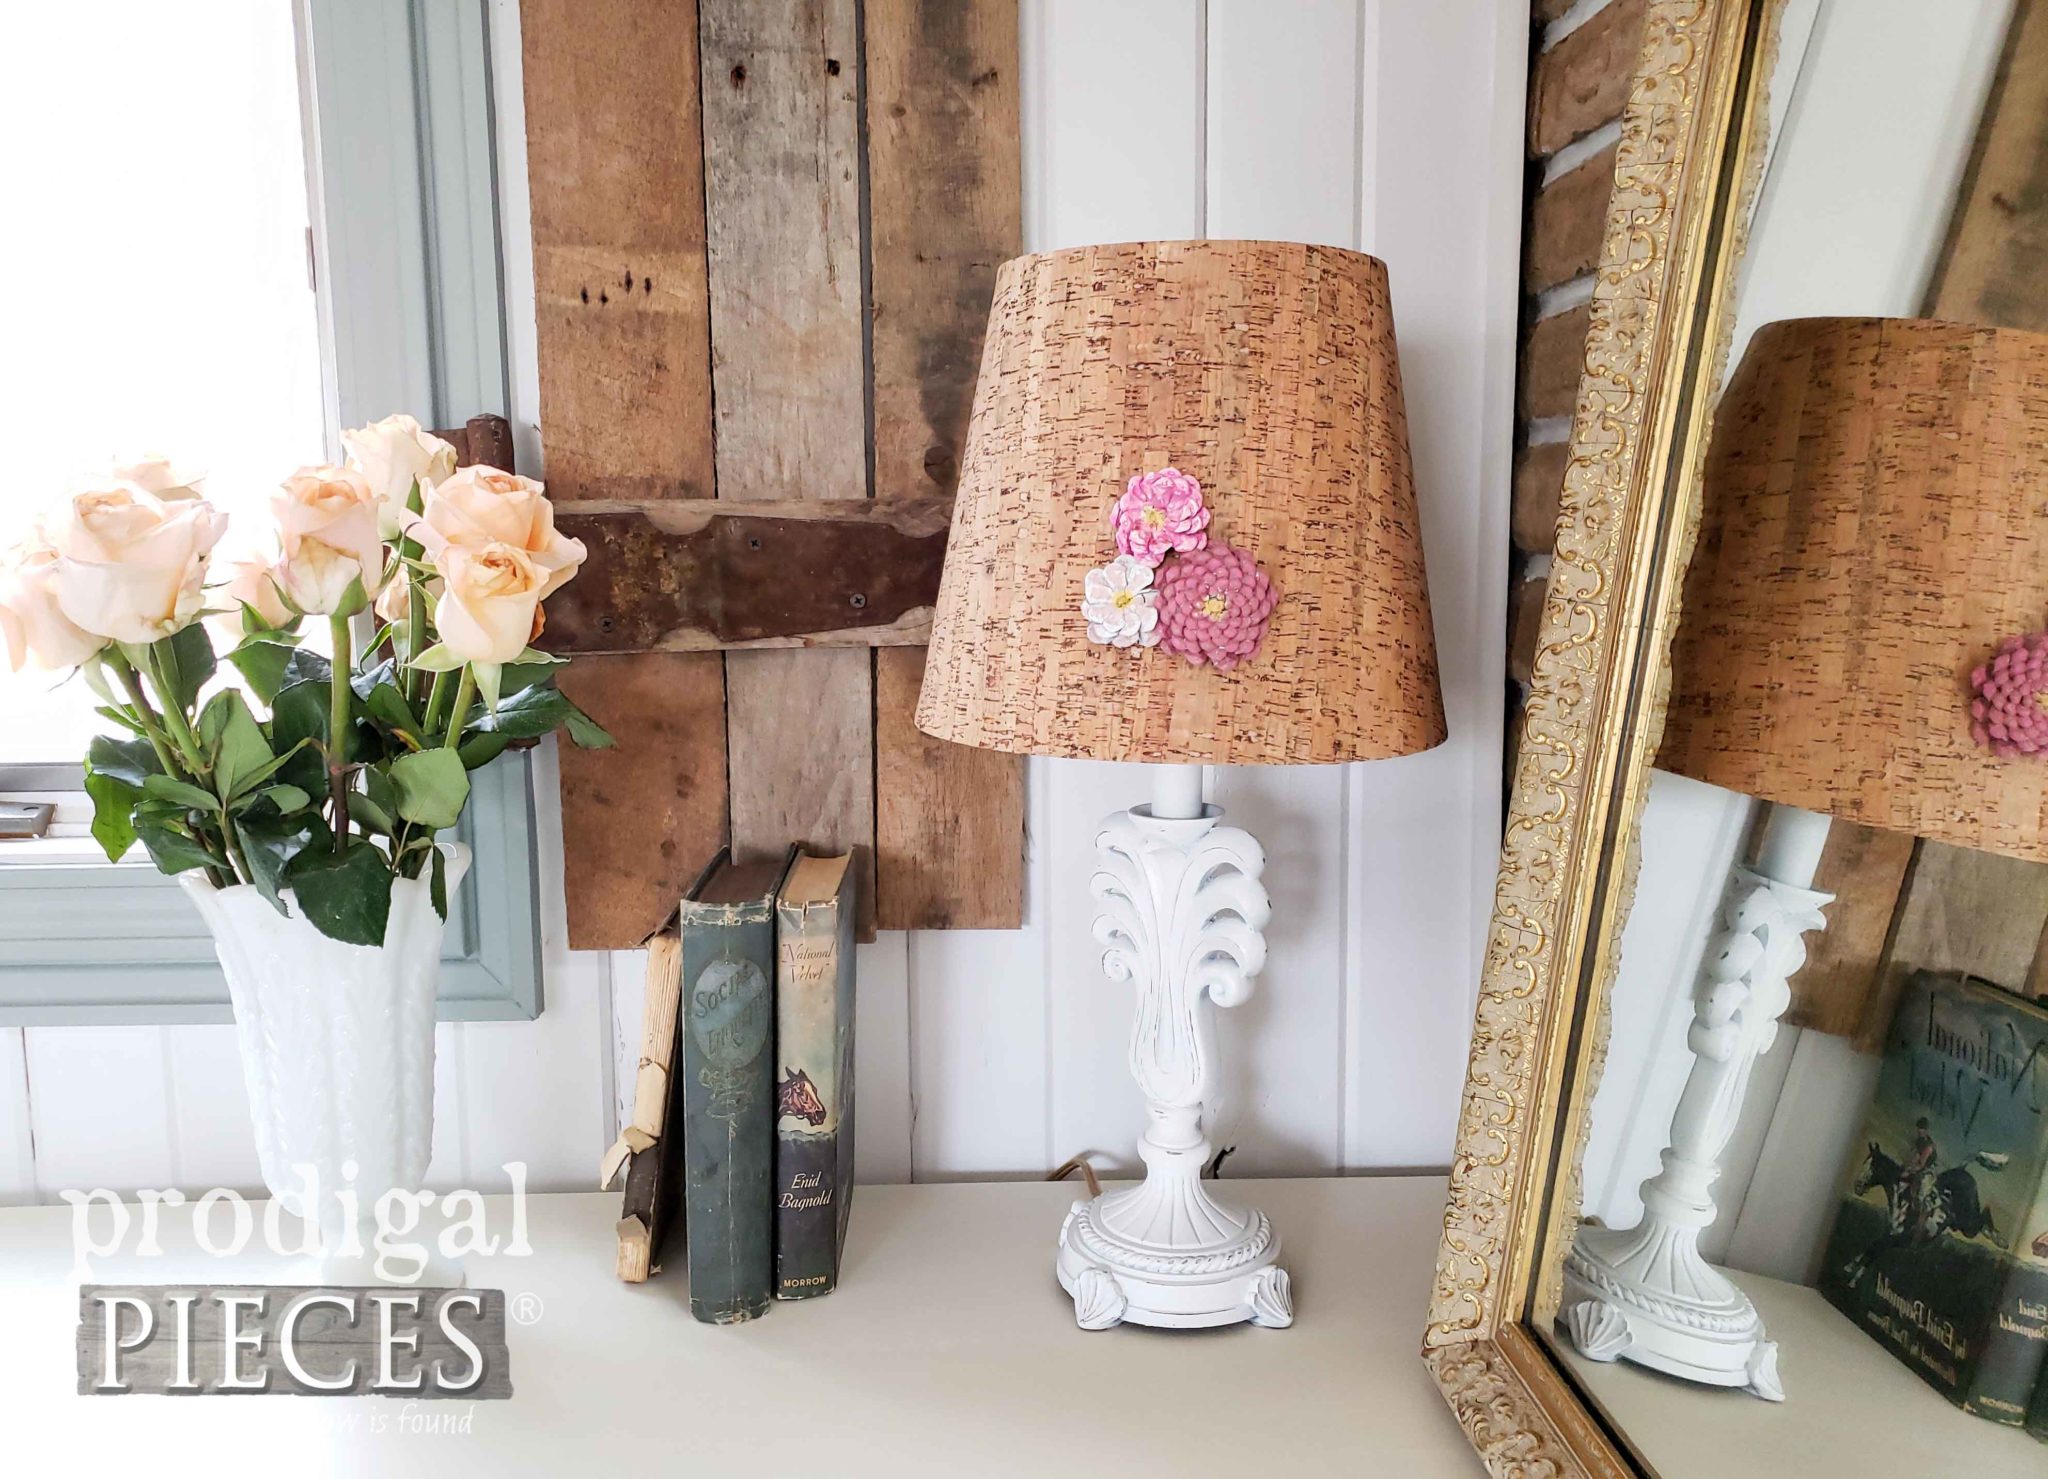 DIY Pinecone Dahlia DIY Lamp by Larissa of Prodigal Pieces | prodigalpieces.com #prodigalpieces #diy #home #homedecor #flowers